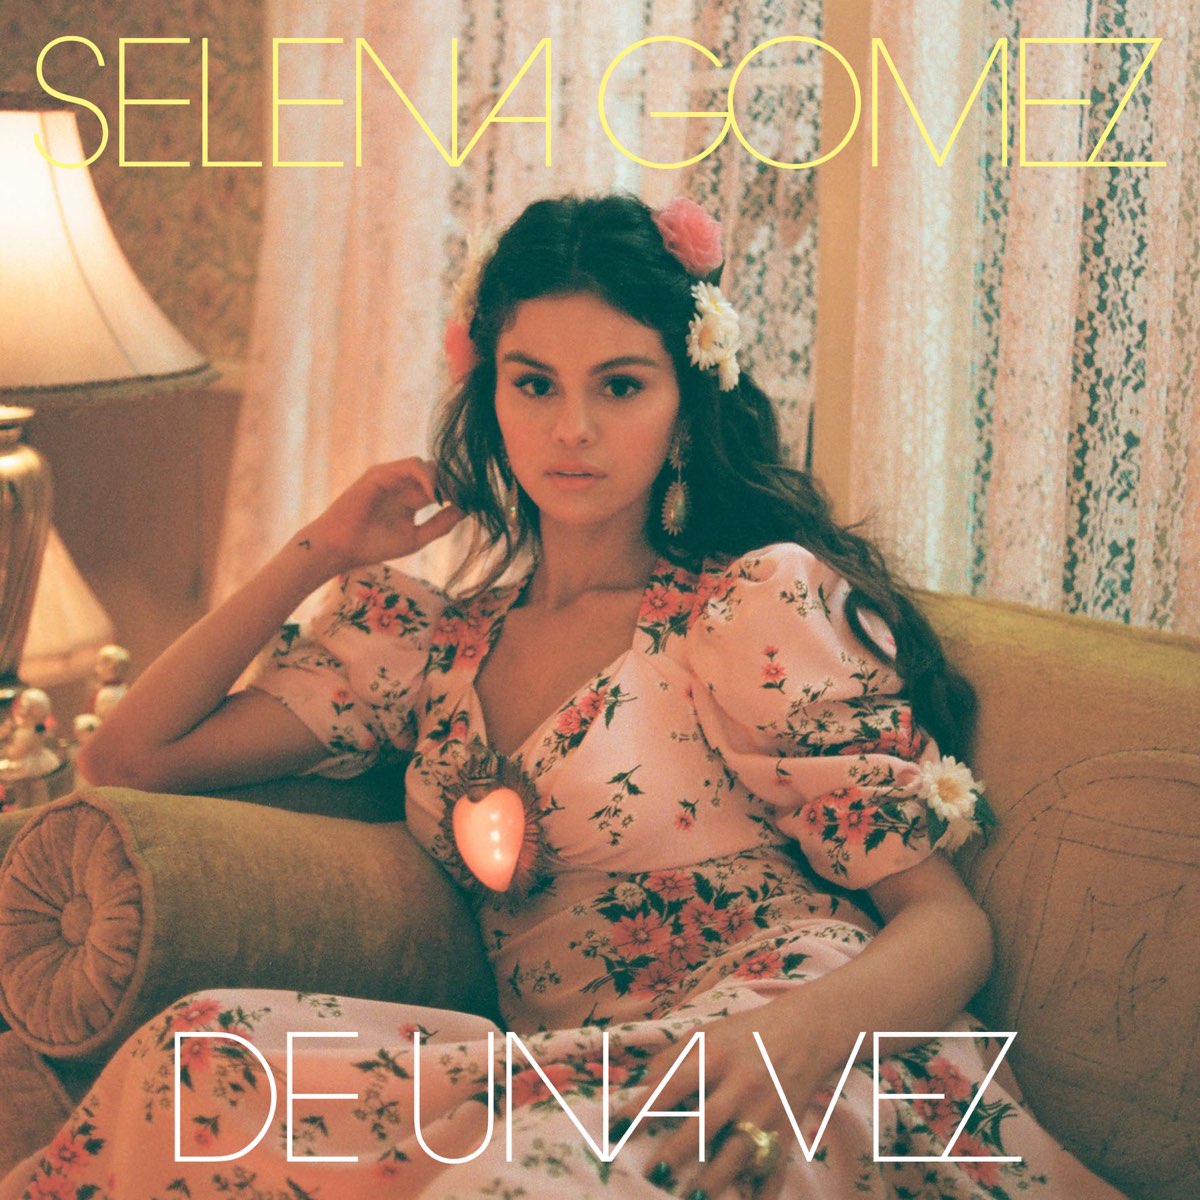 De Una Vez - Single by Selena Gomez on Apple Music